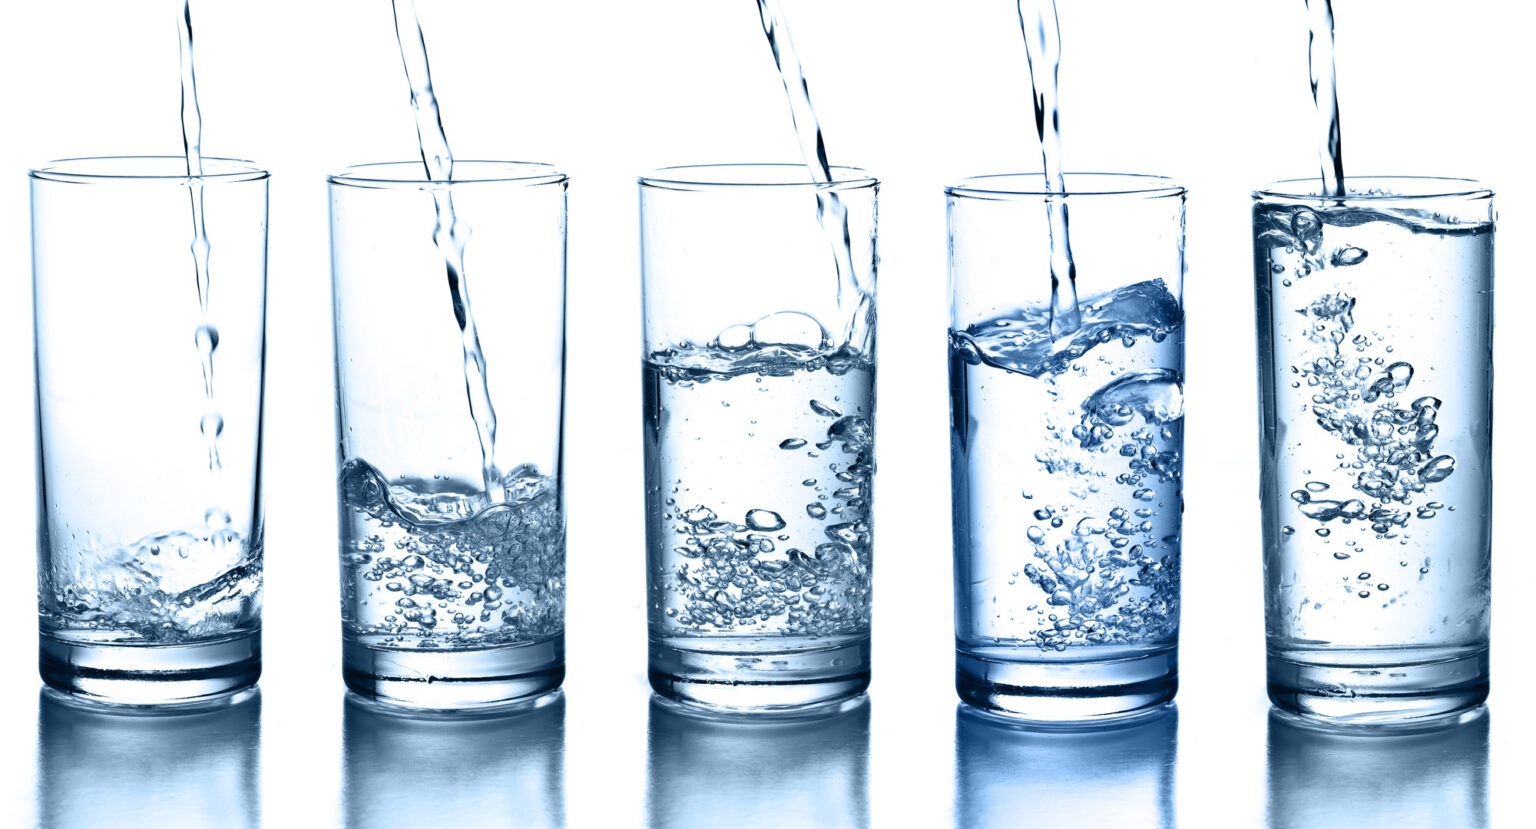 Carbon Block Water Filters vs. Reverse Osmosis